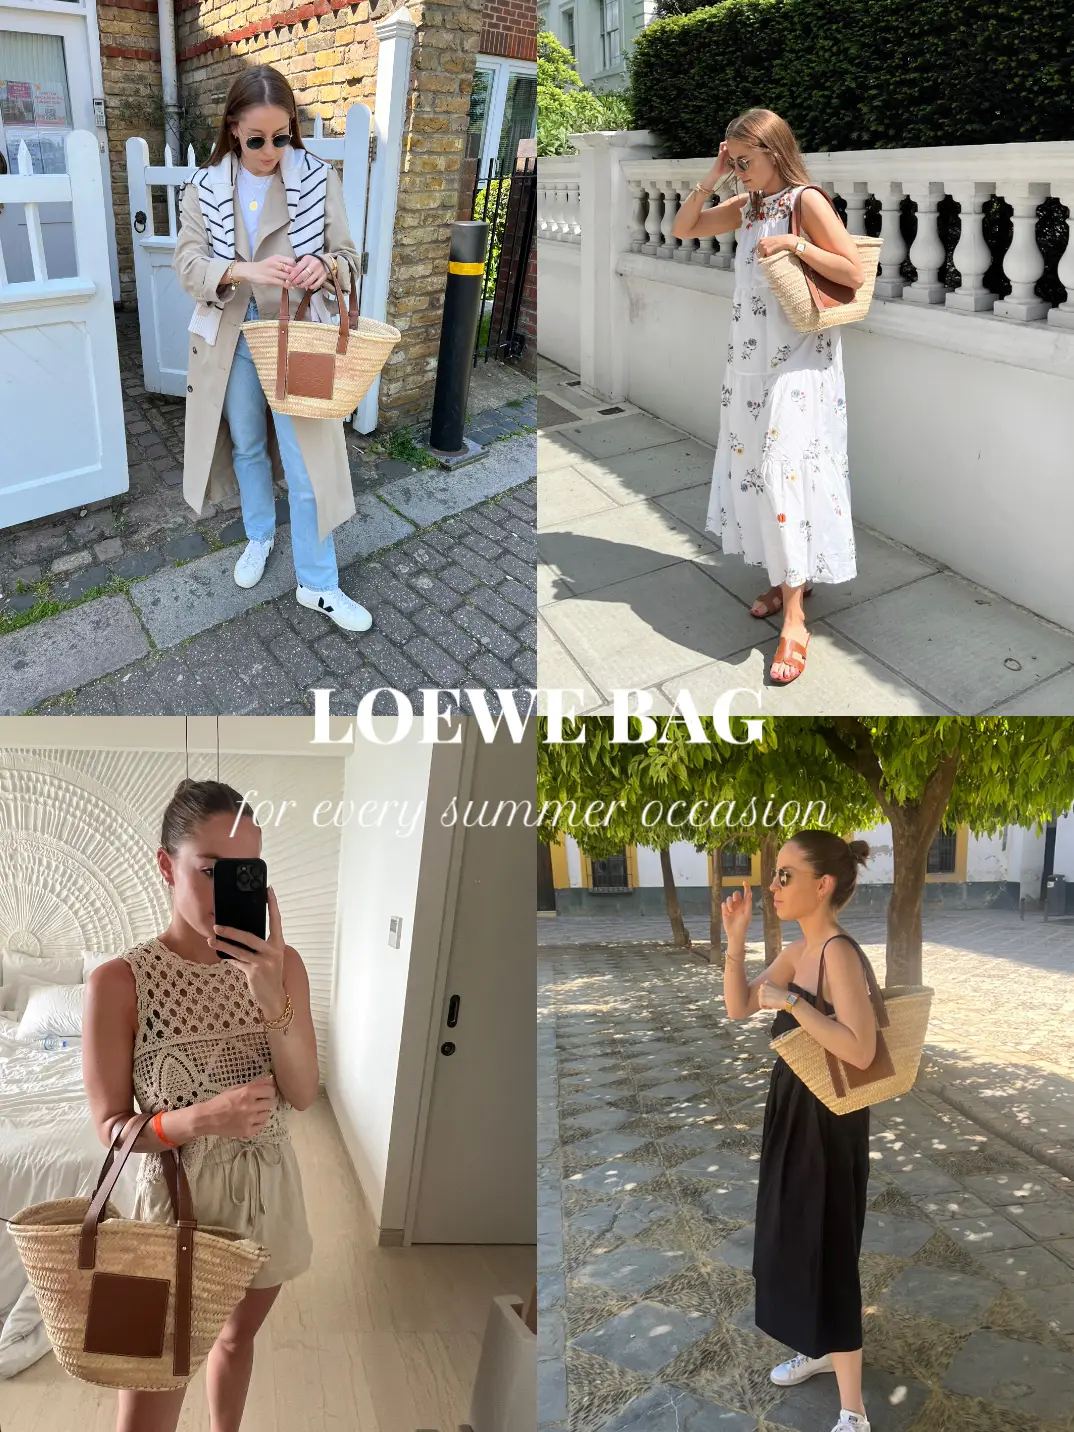 The Ultimate Summer Bag – lottiehelen